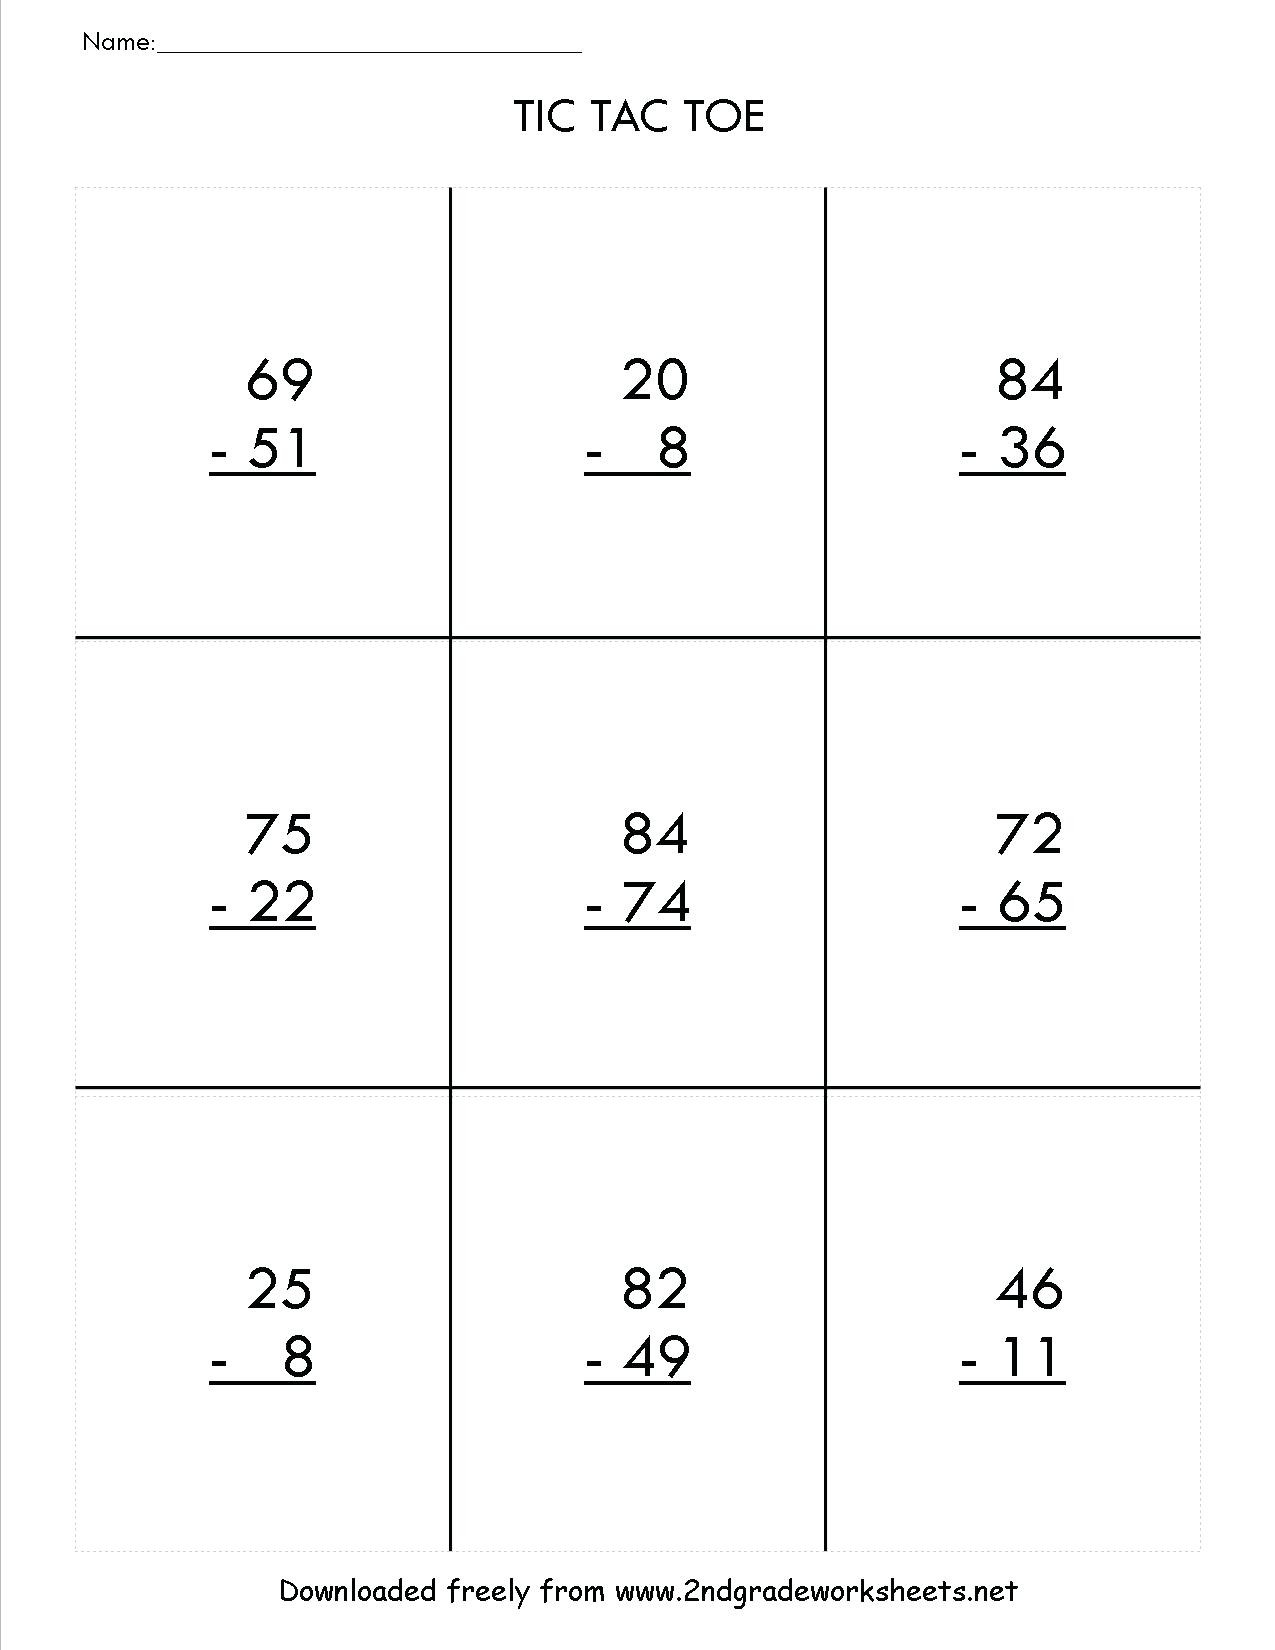 Free Math Worksheets Second Grade 2 Subtraction Subtract Regroup Across Zeros